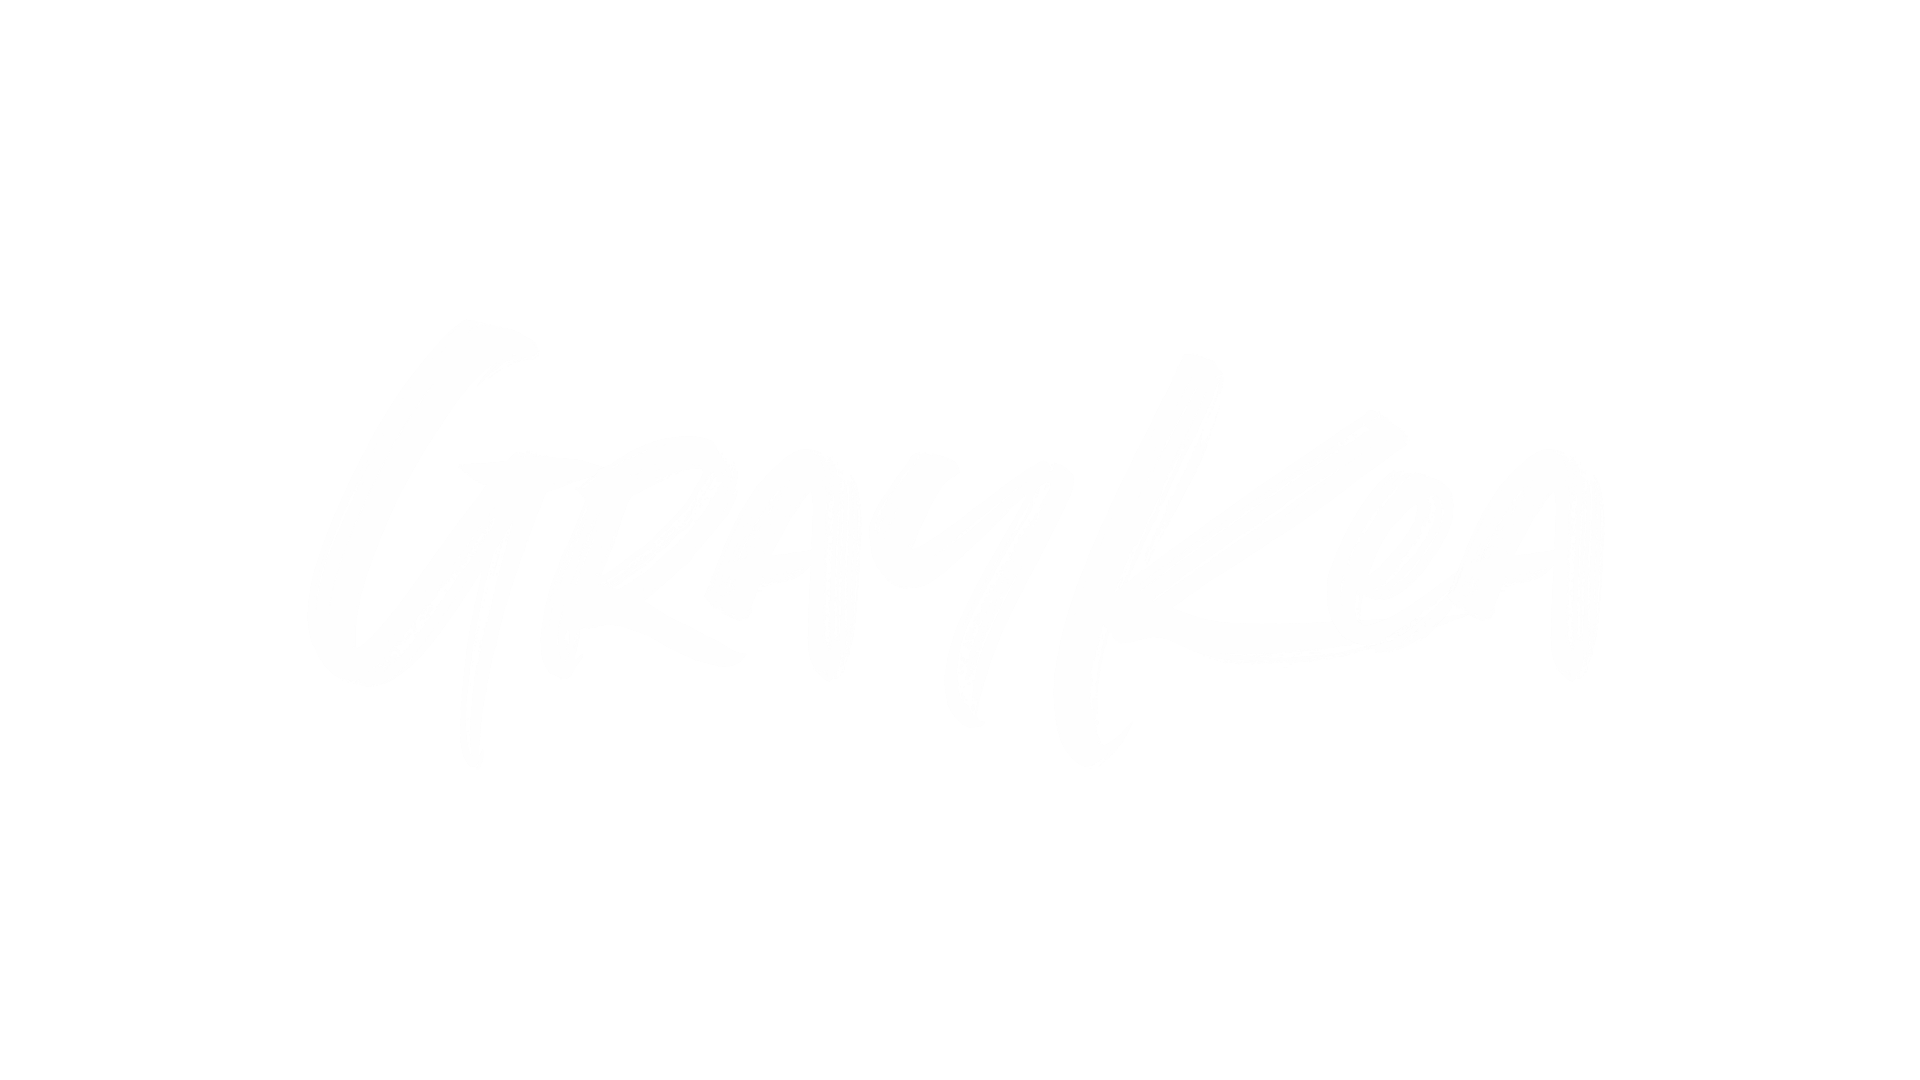 GrayKea logo and wordmark with UIDEA logo